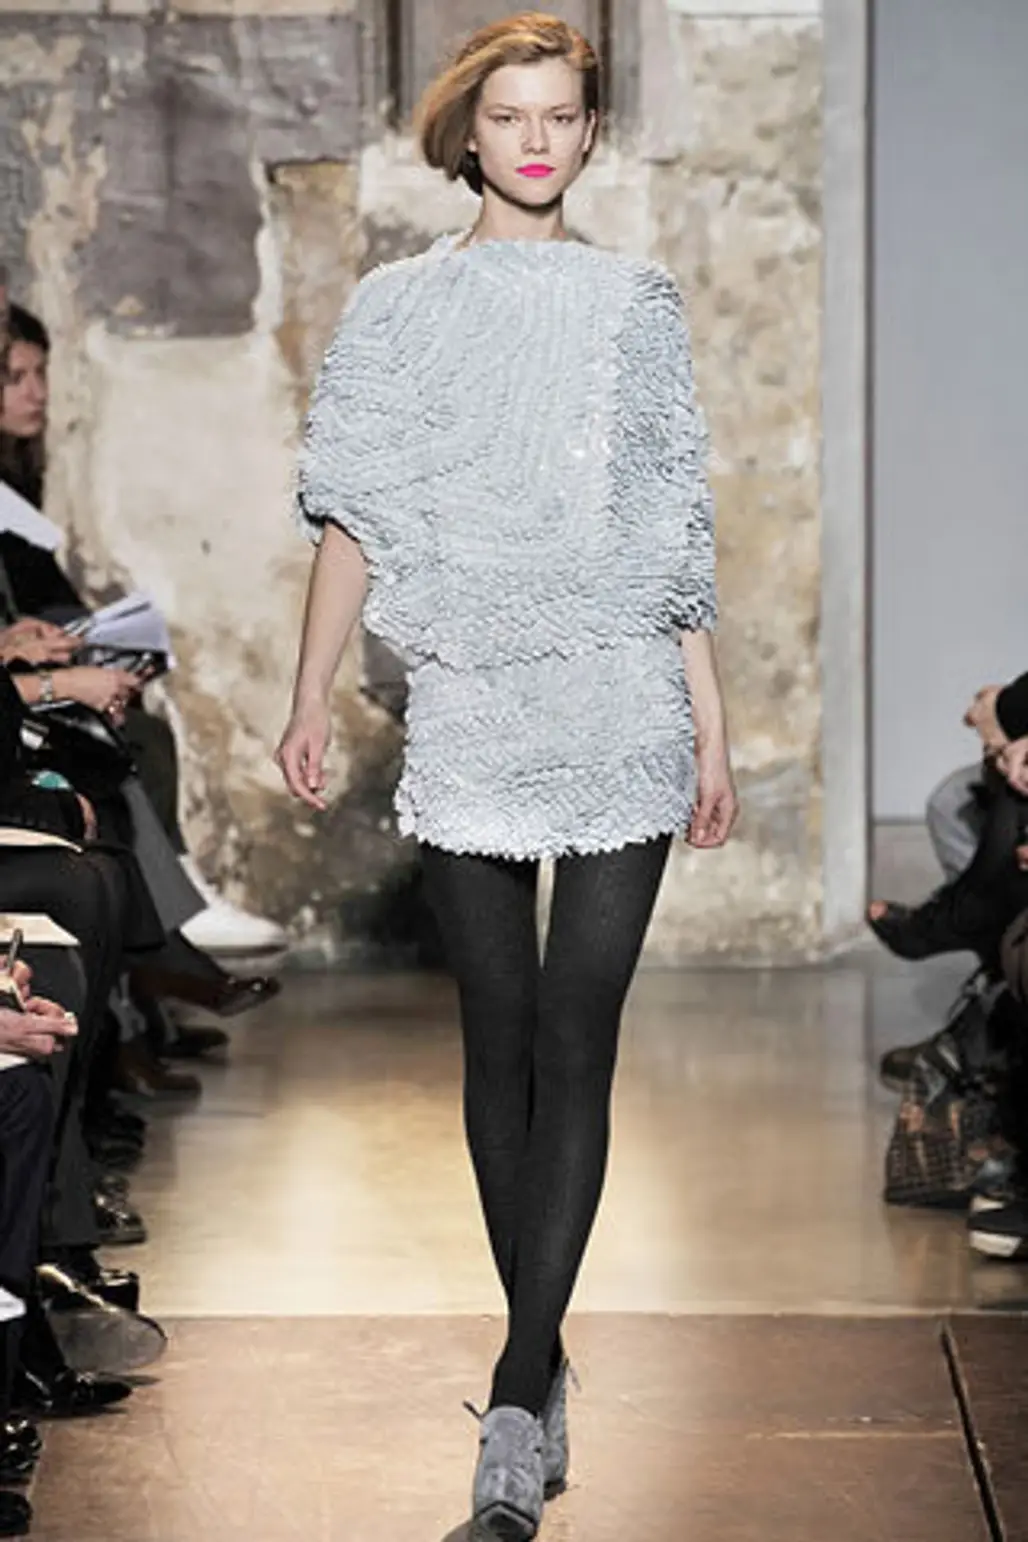 Feeling (Snow) Flake-y at Antonio Berardi Sequin Dress